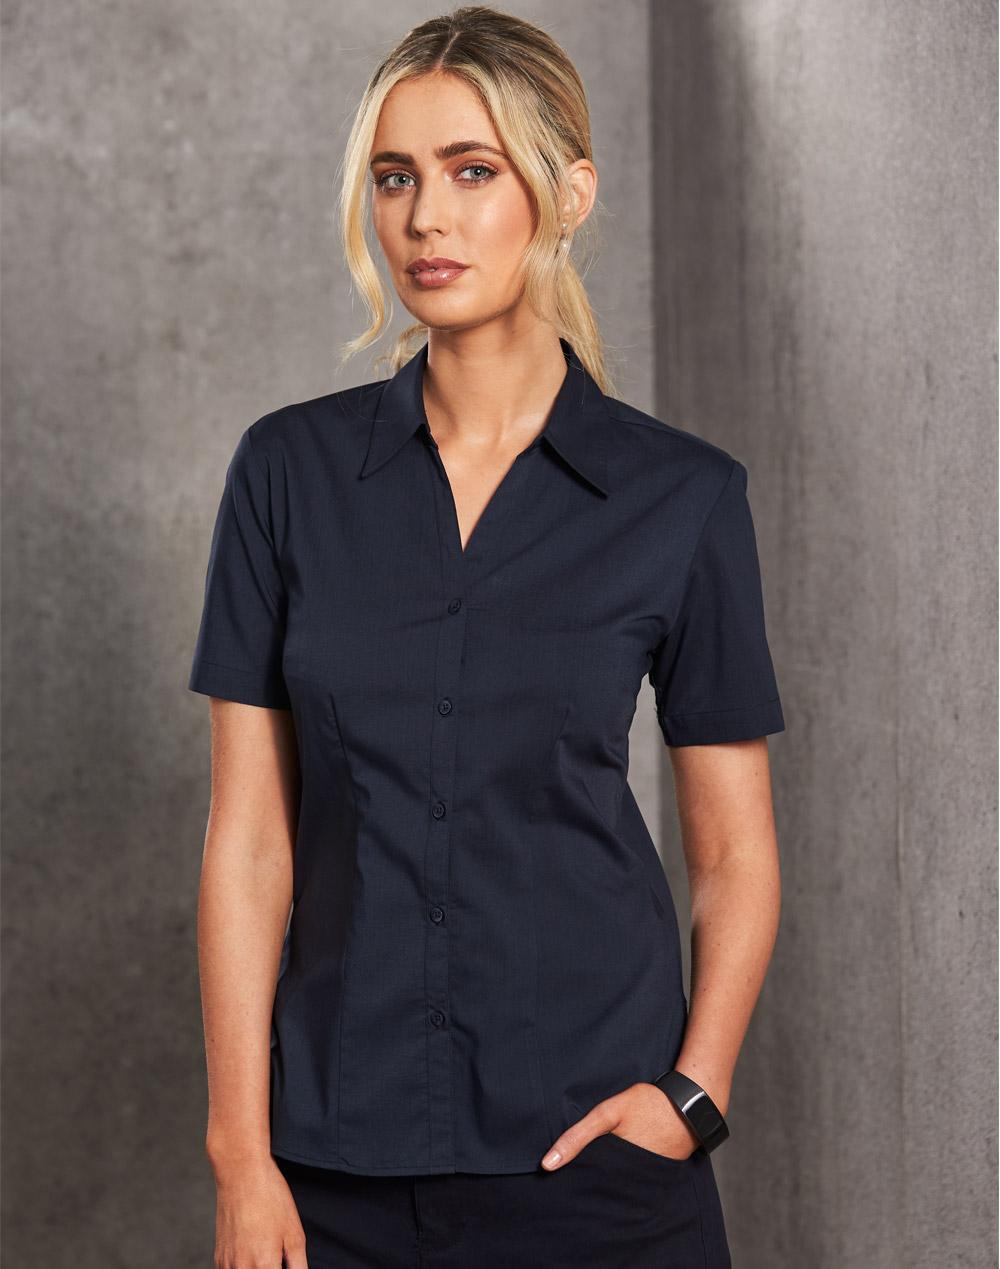 Benchmark BS07S Executive Lady Short Sleeve